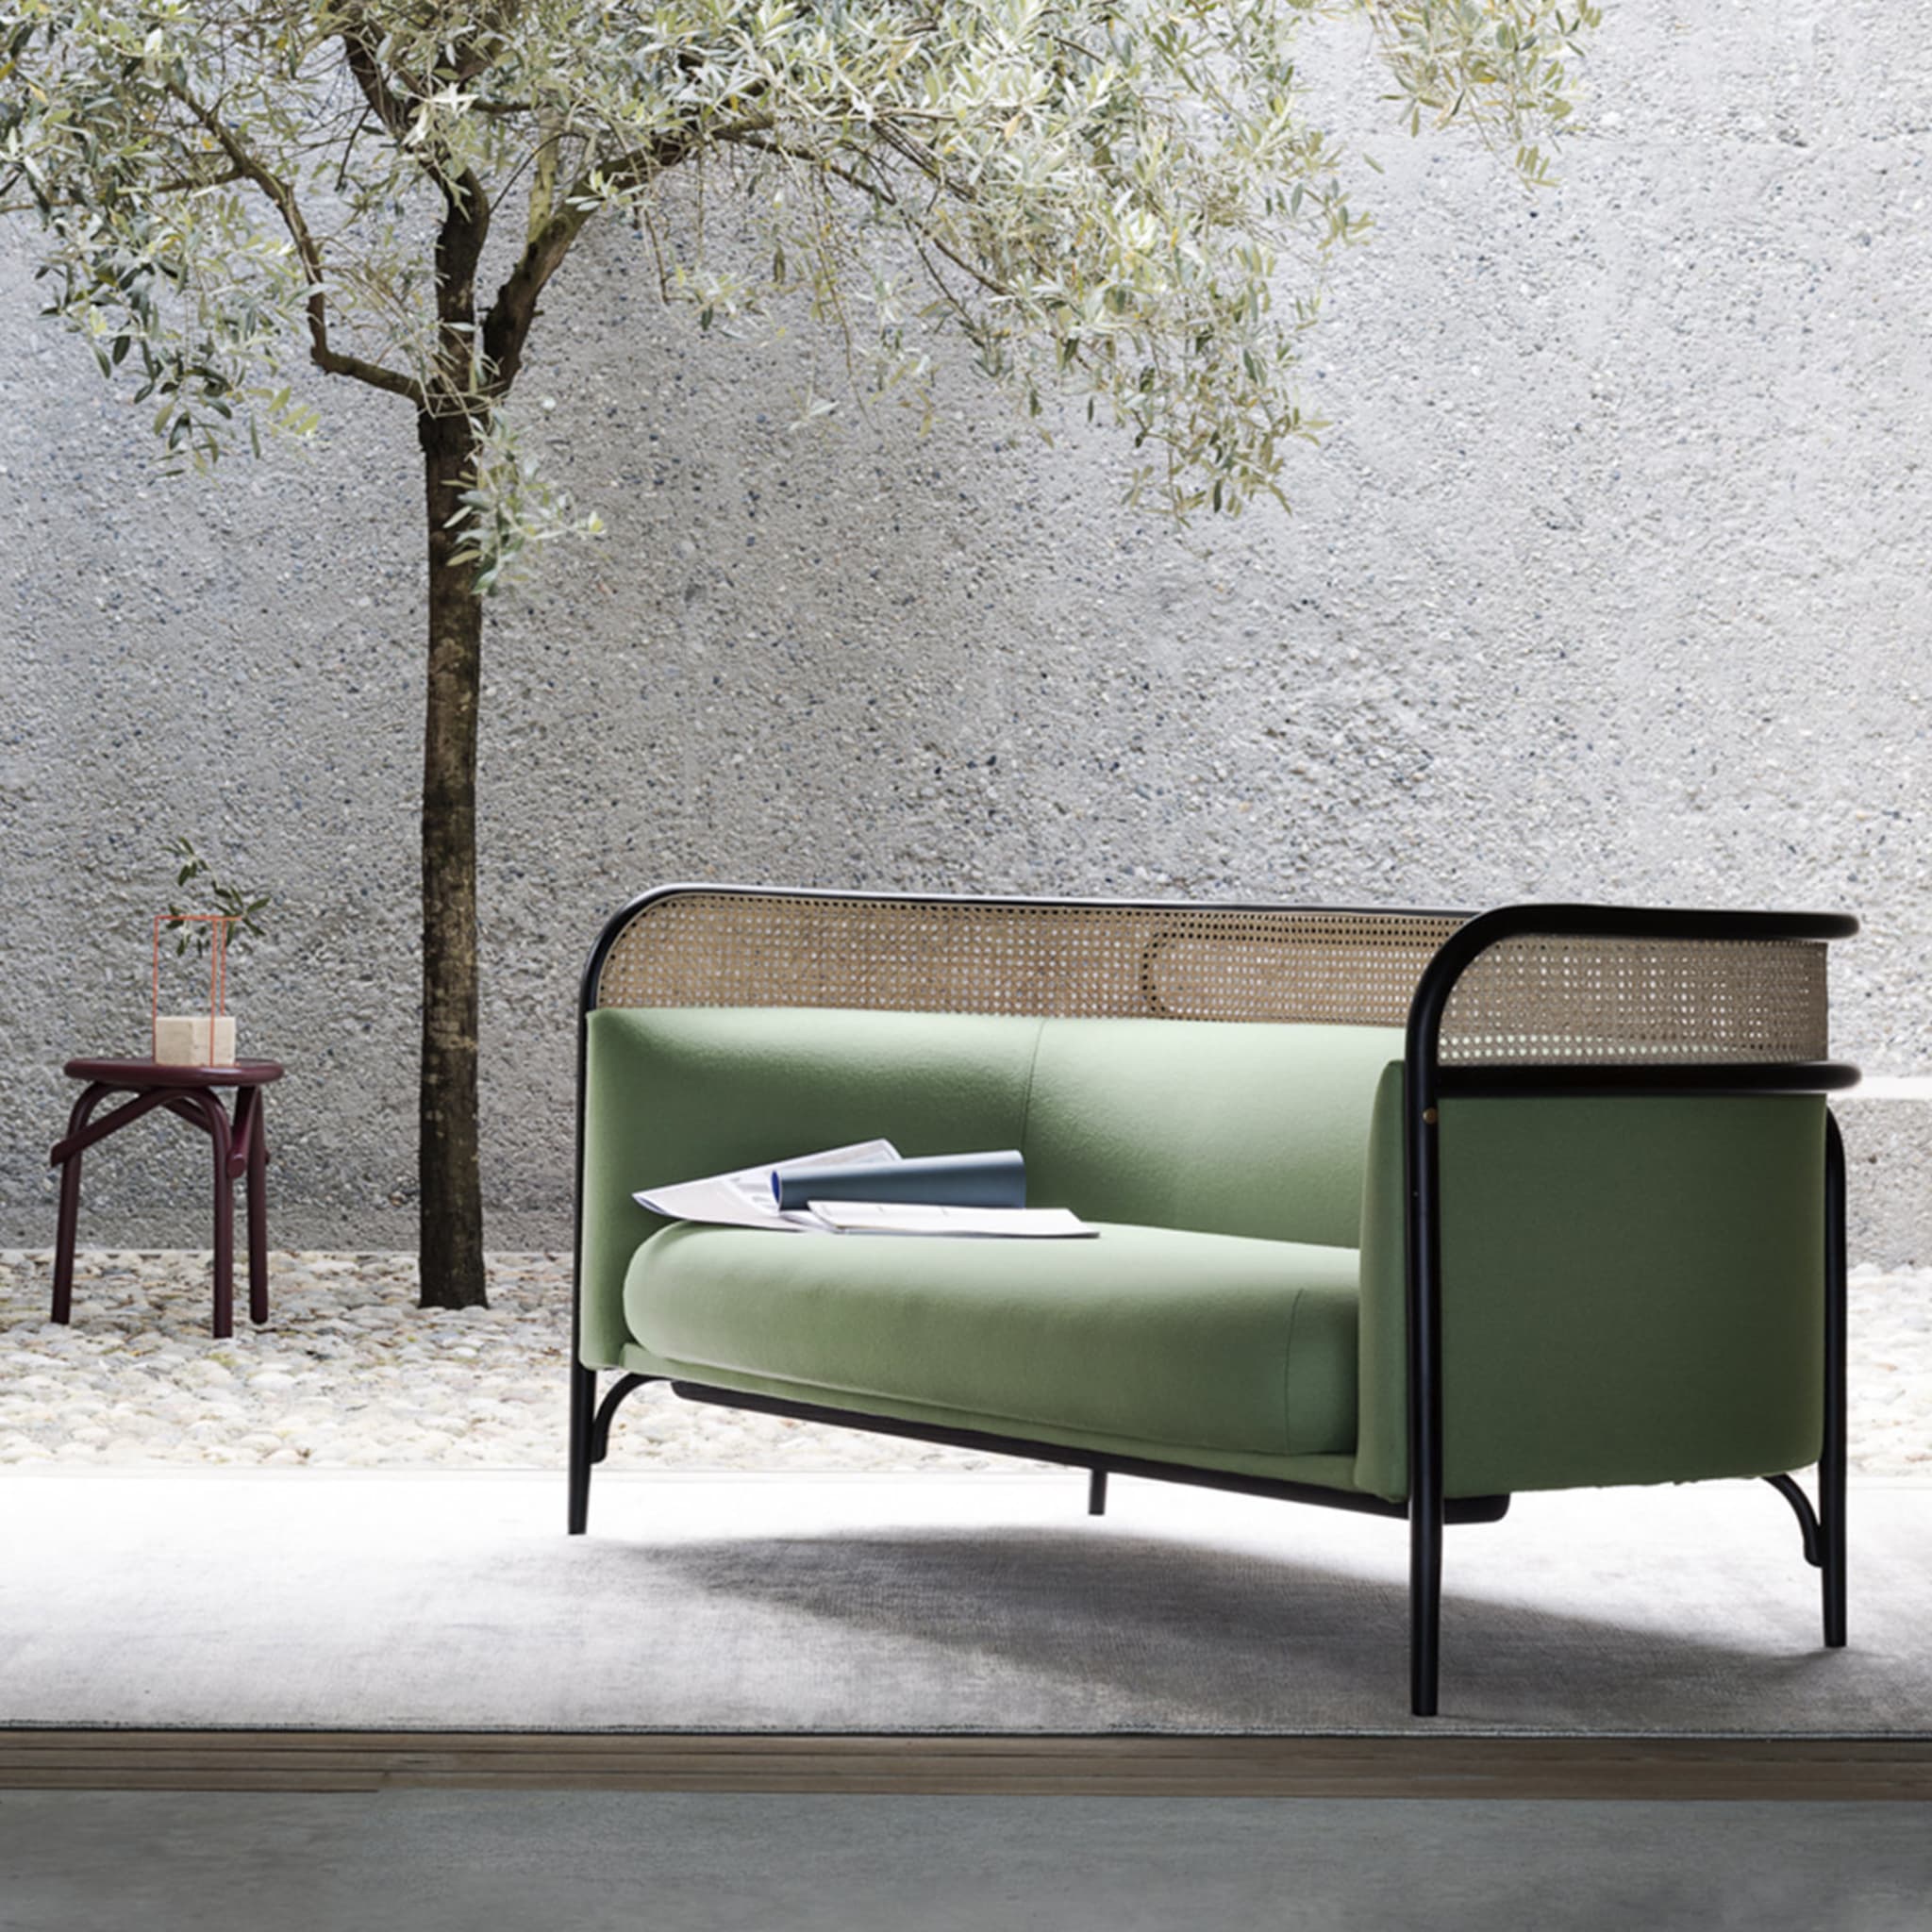 Targa 2-Seat Sofa in Green by GamFratesi - Alternative view 2